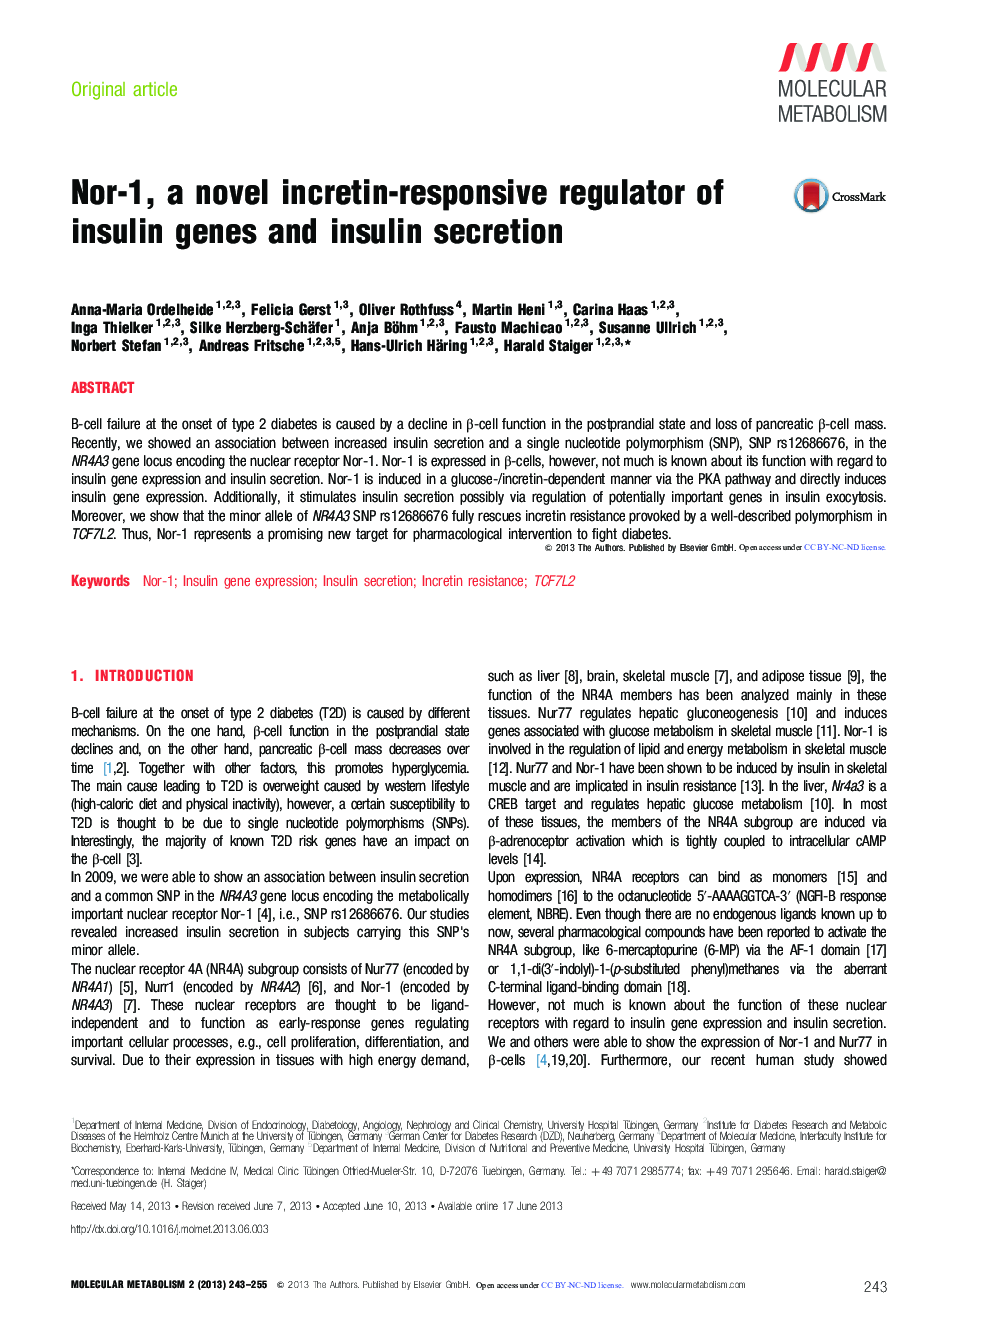 Nor-1, a novel incretin-responsive regulator of insulin genes and insulin secretion ⋆